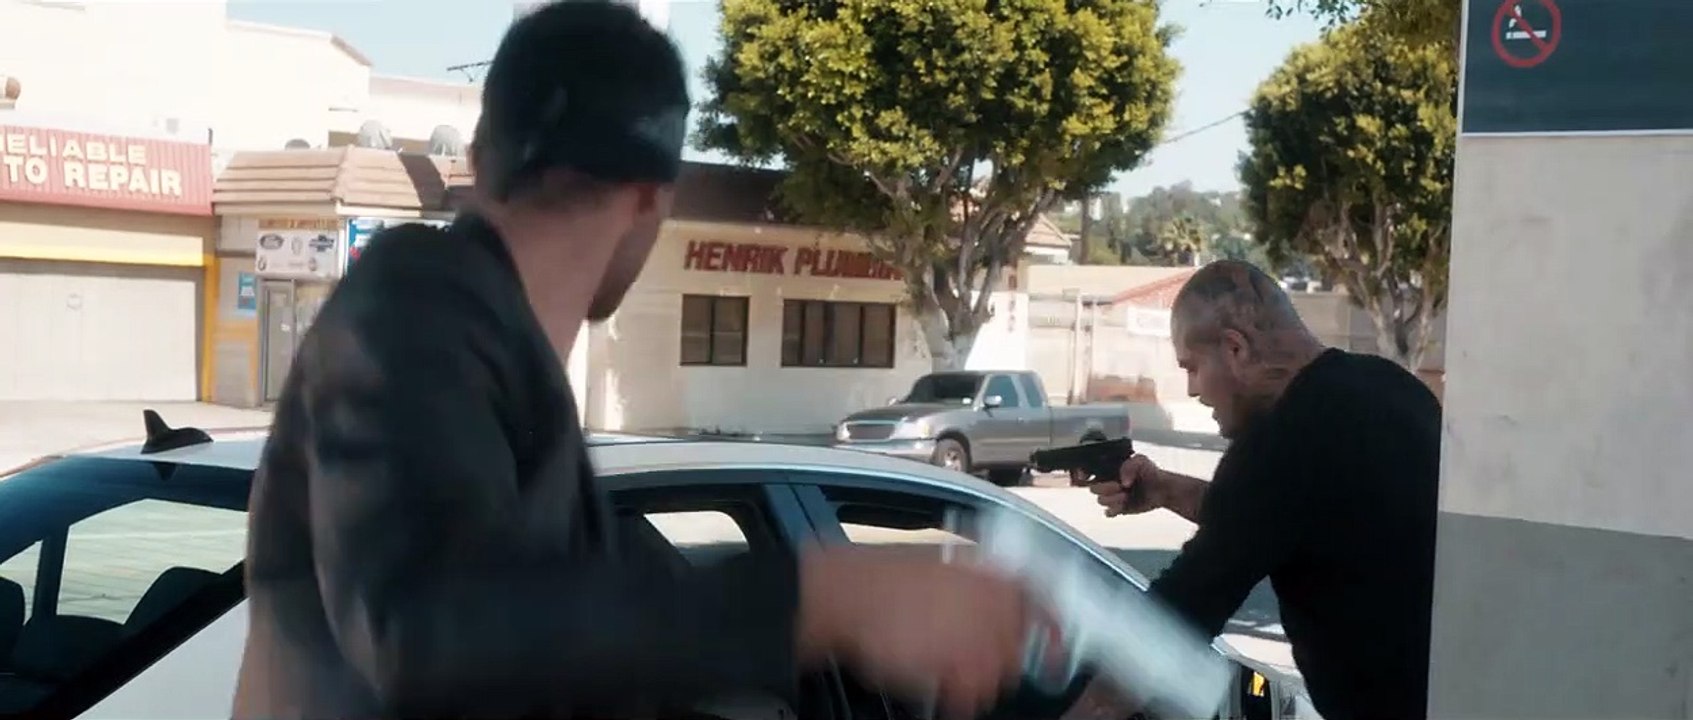 Khali the Killer - Leben und Sterben in East L.A. Trailer DF